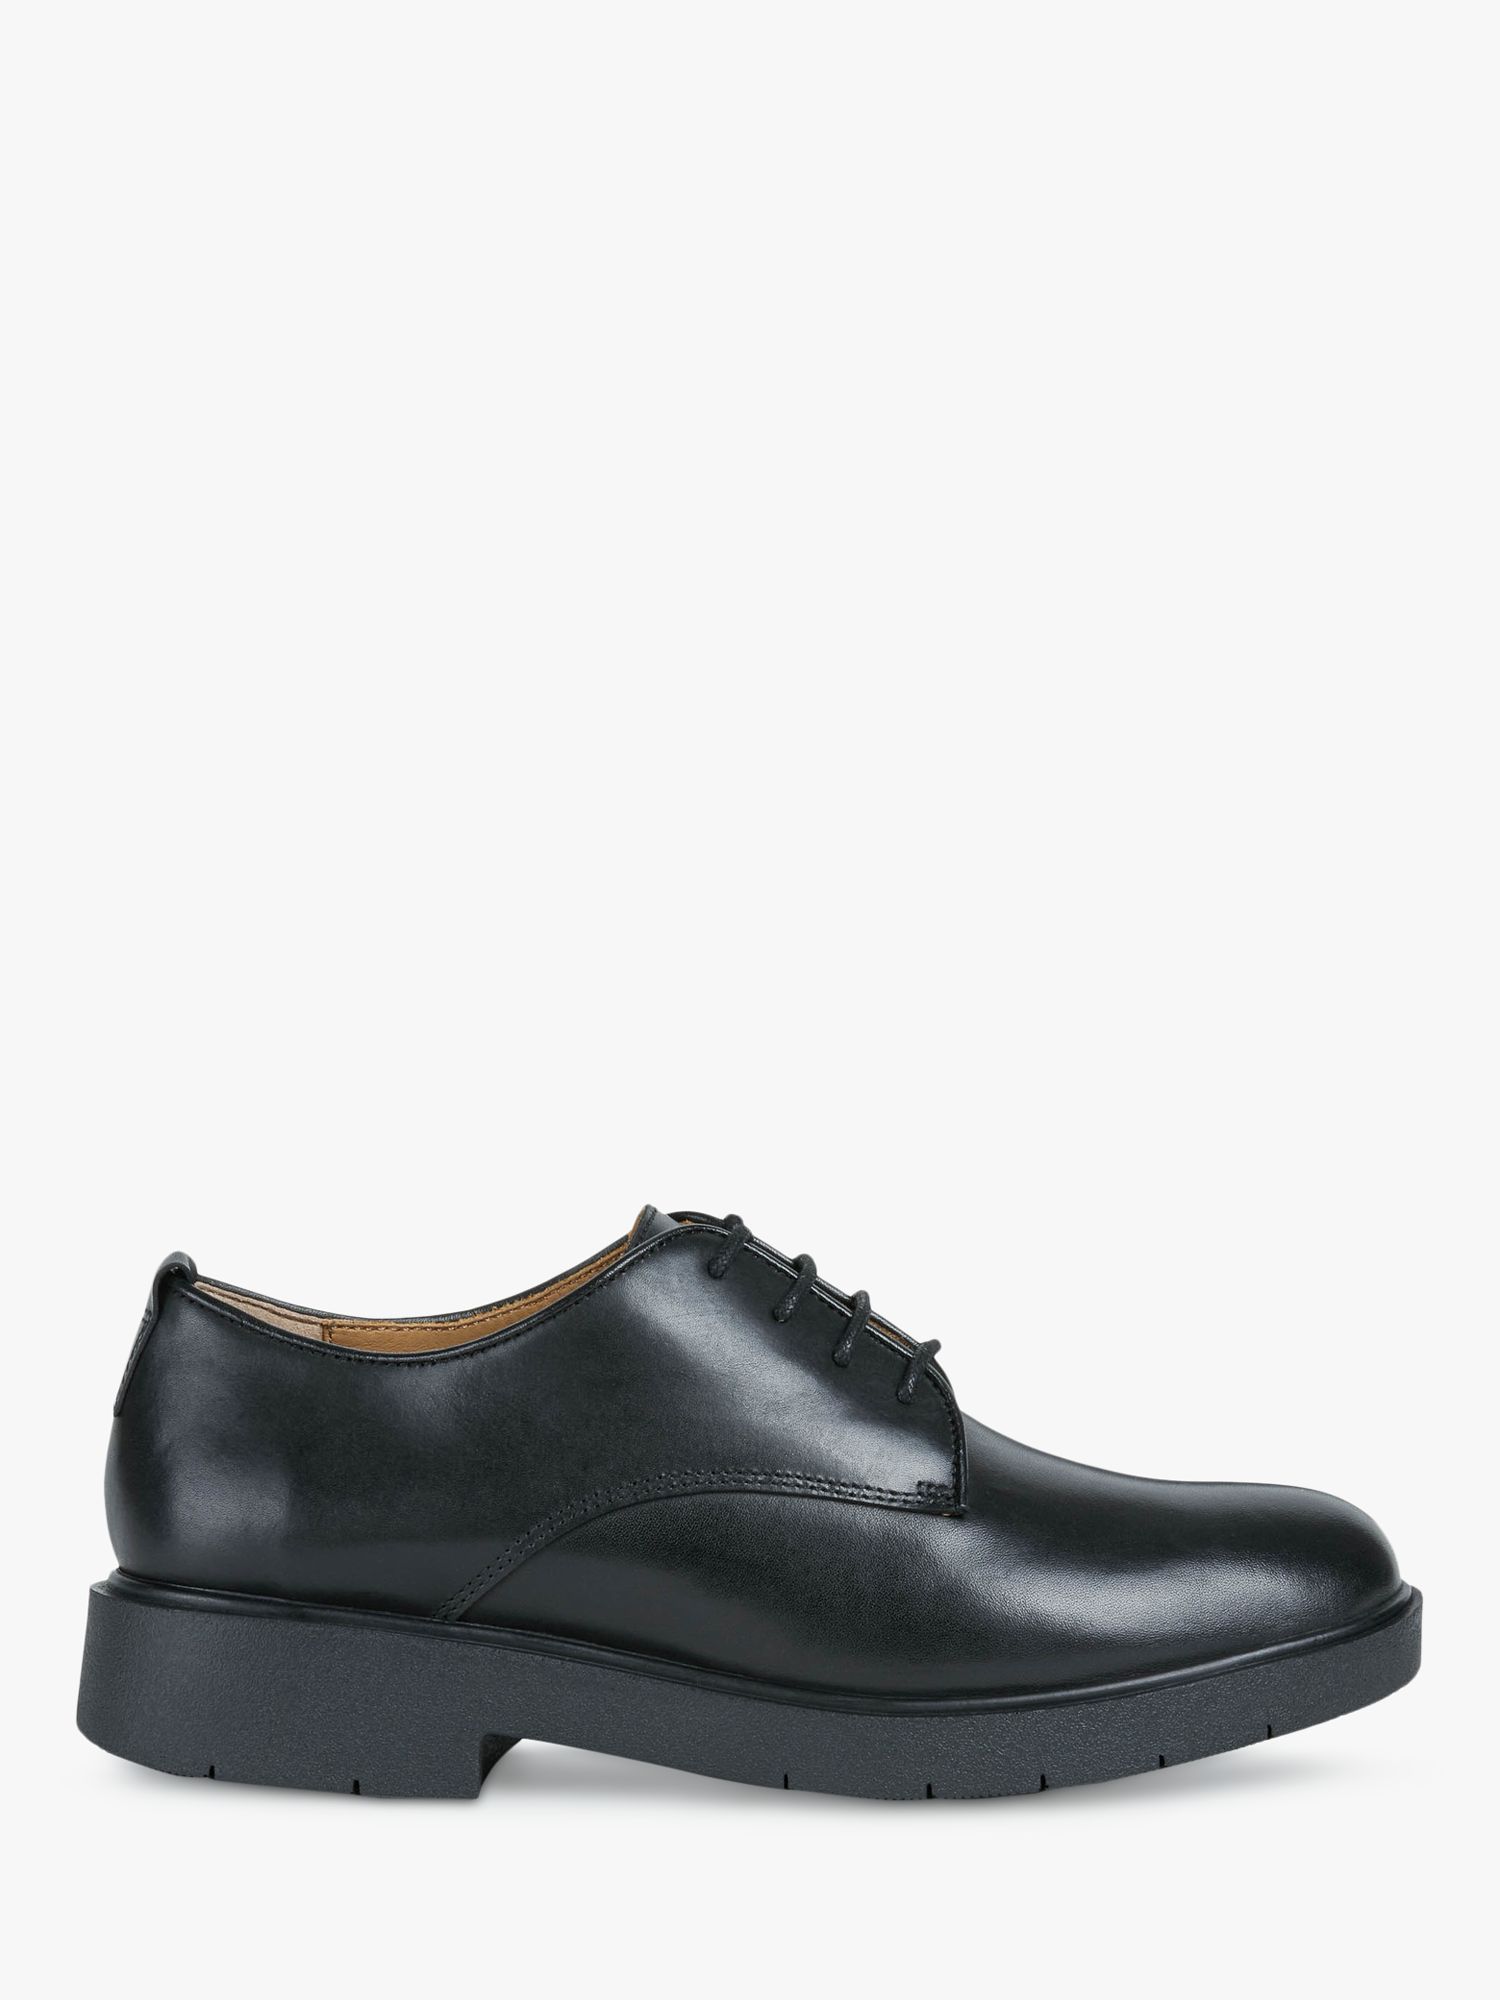 Geox D Spherica EC1 Leather Derby Shoes, Black, 3